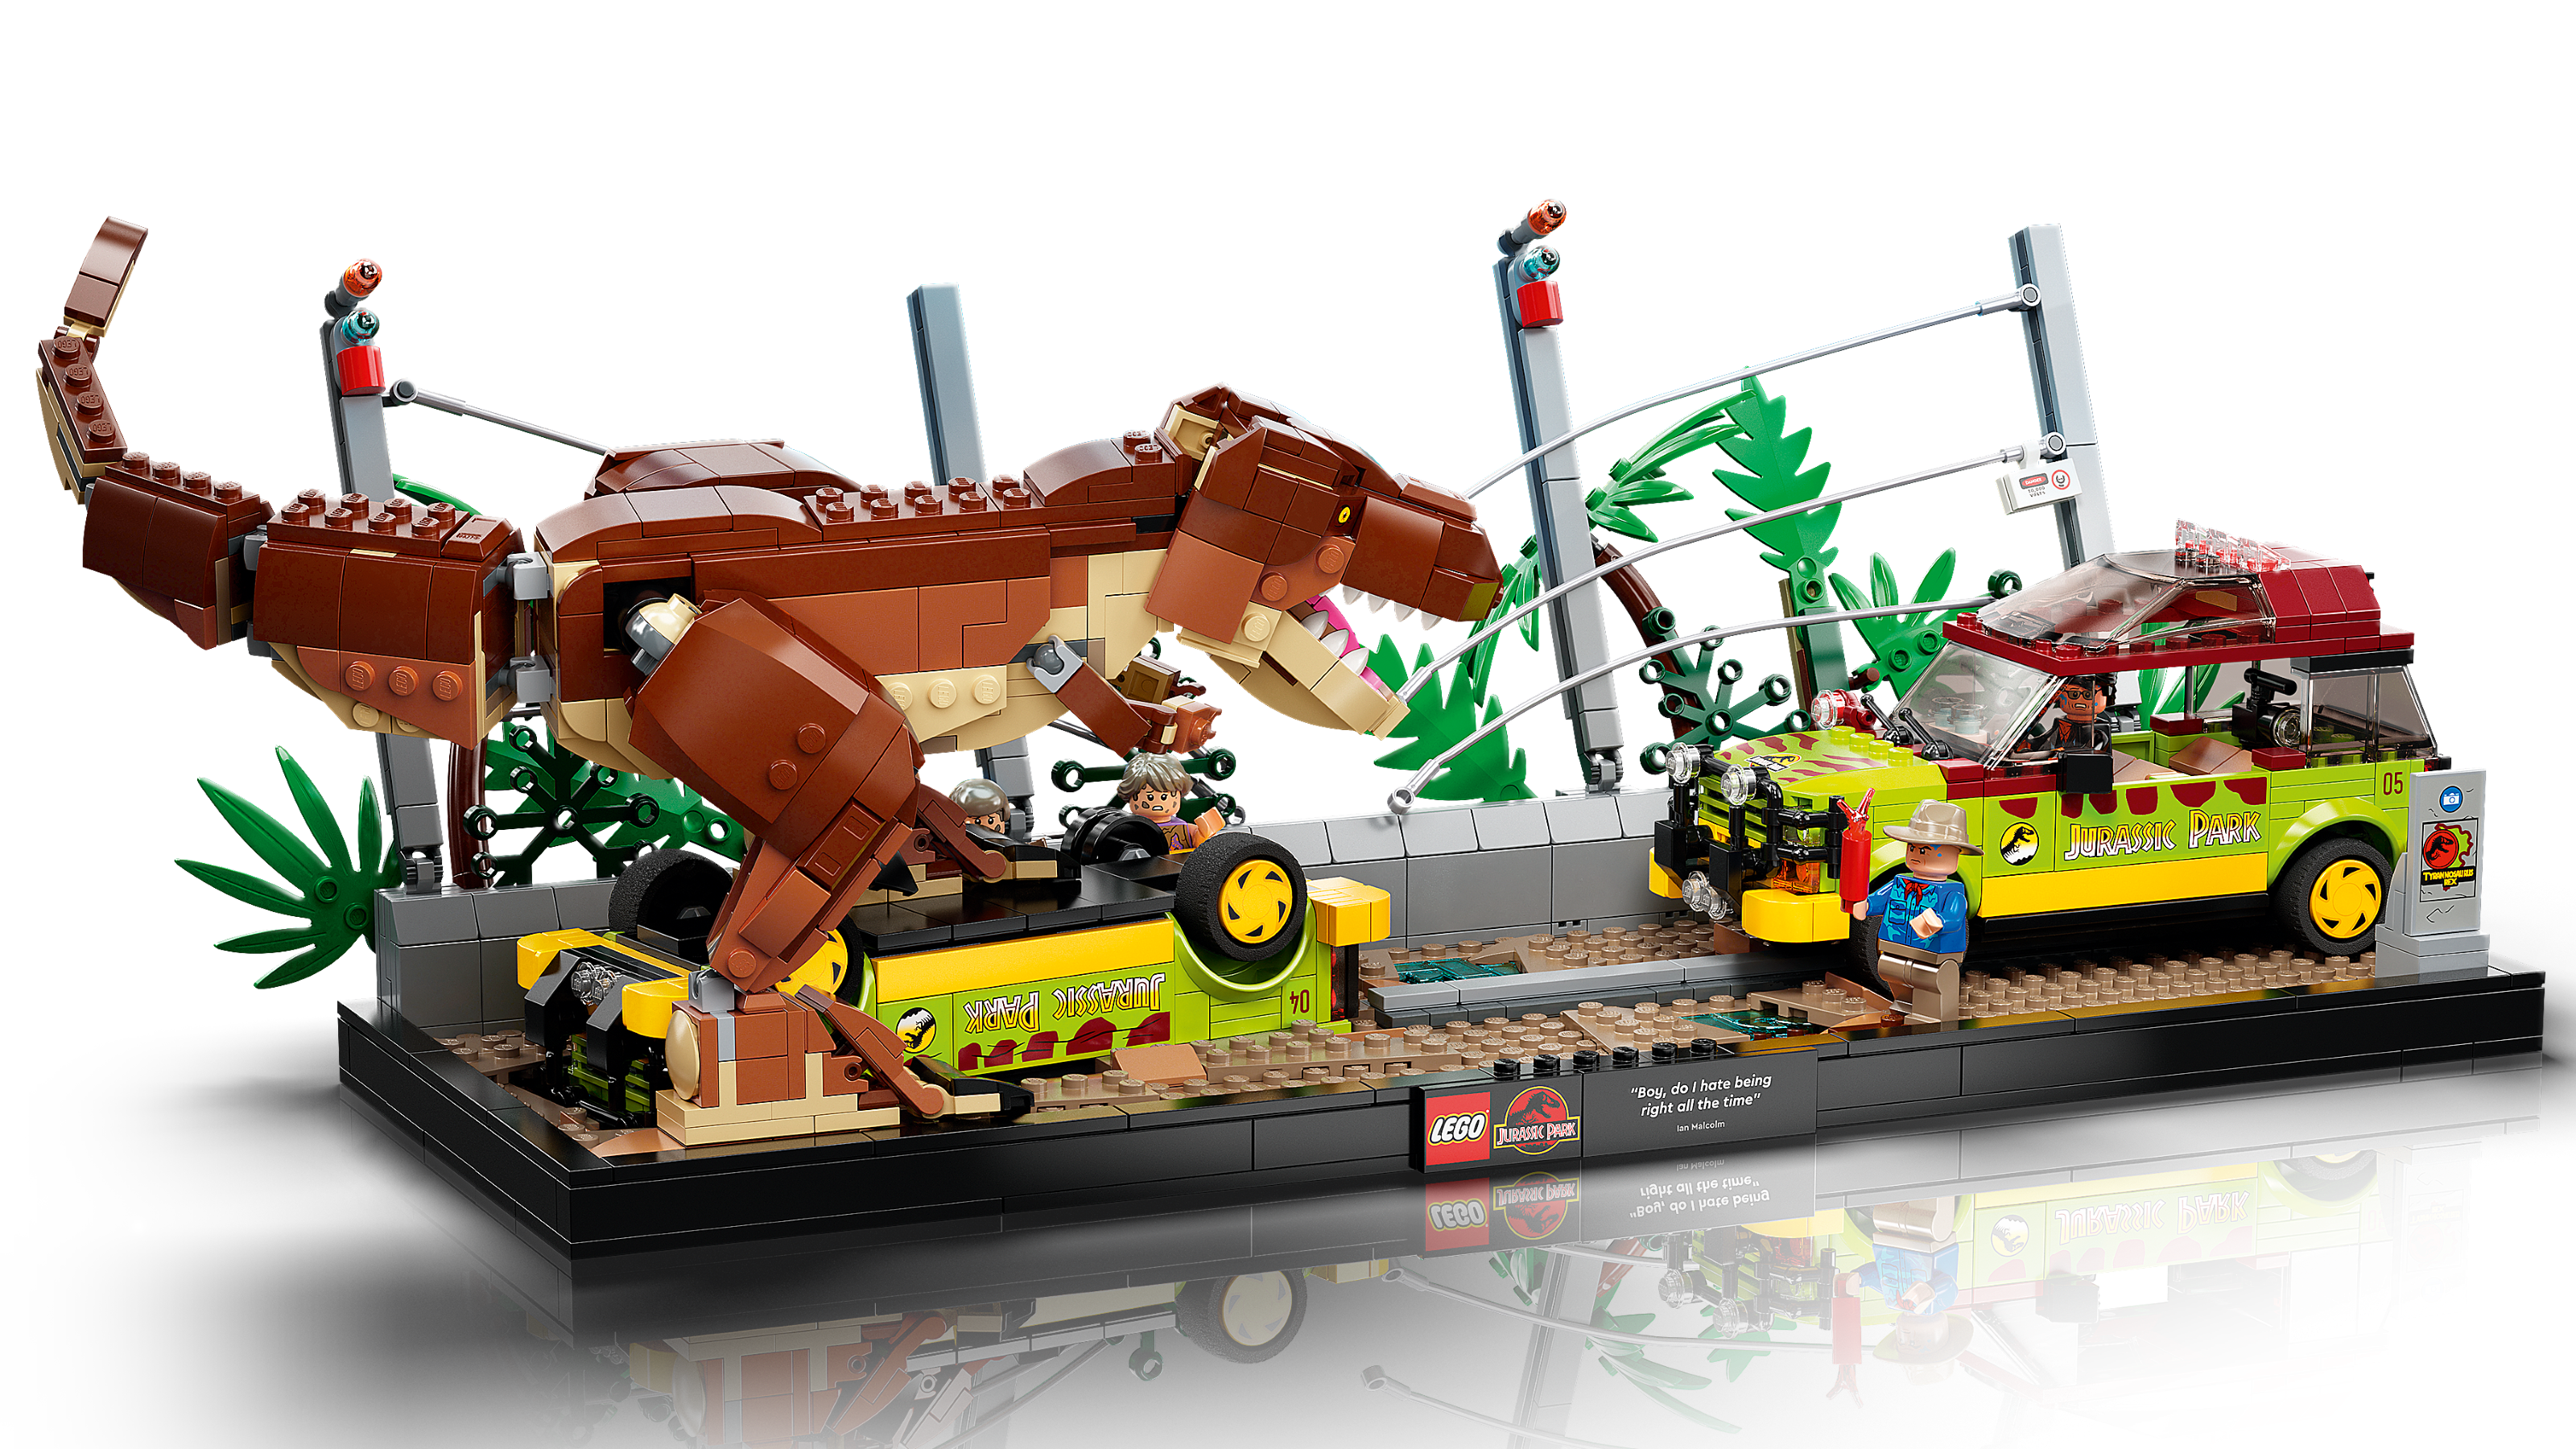 Toy Lego Scene In Jurassic Park Photo 